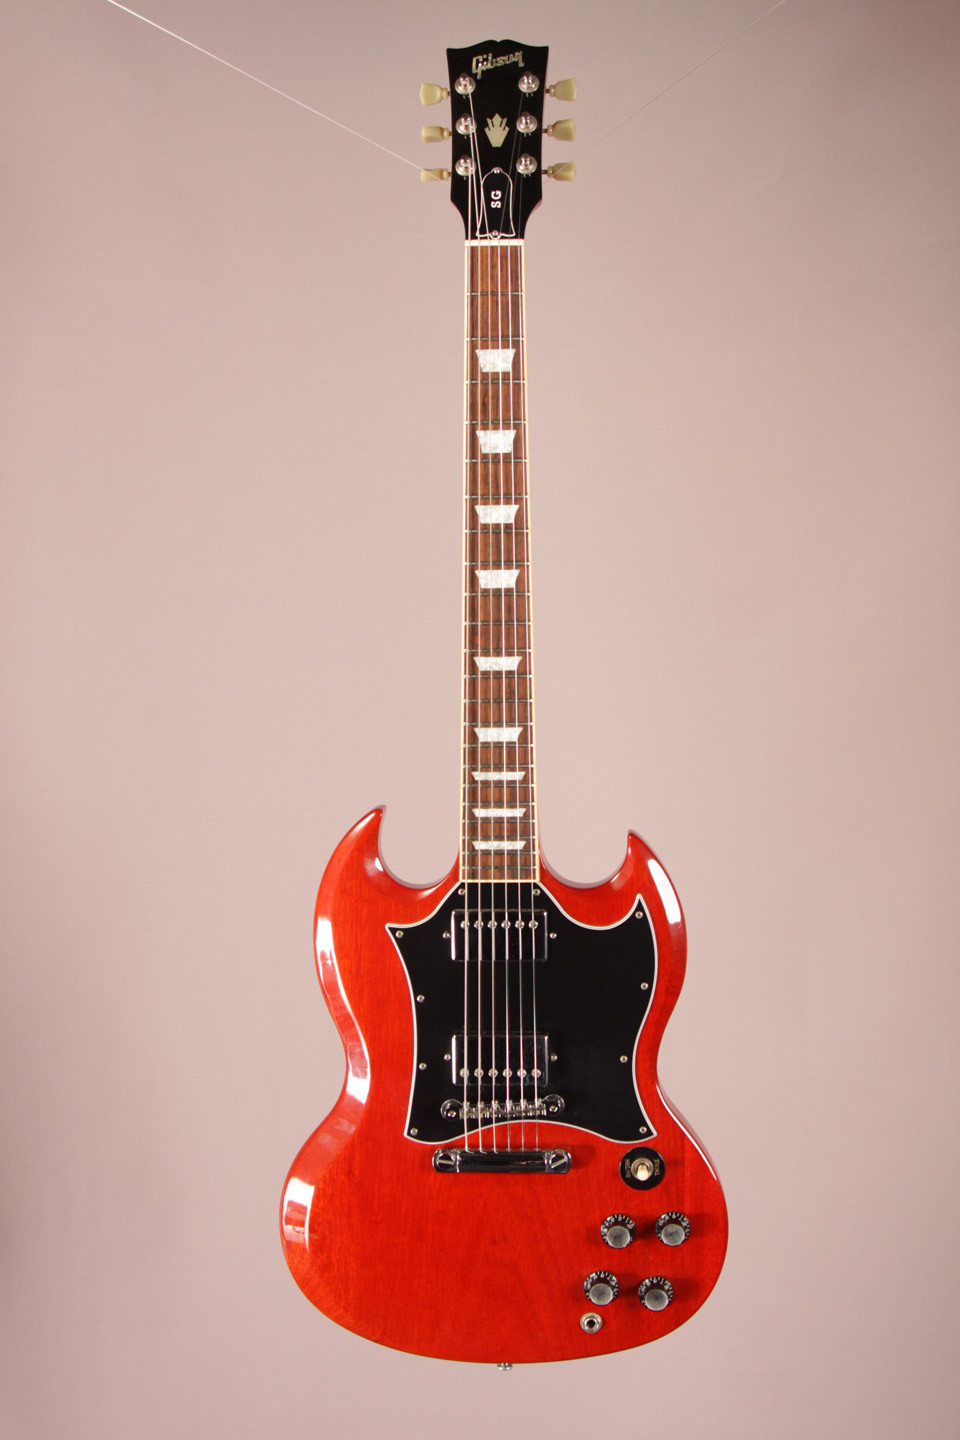 Gibson SG Standard 2000 | Gruhn Guitars